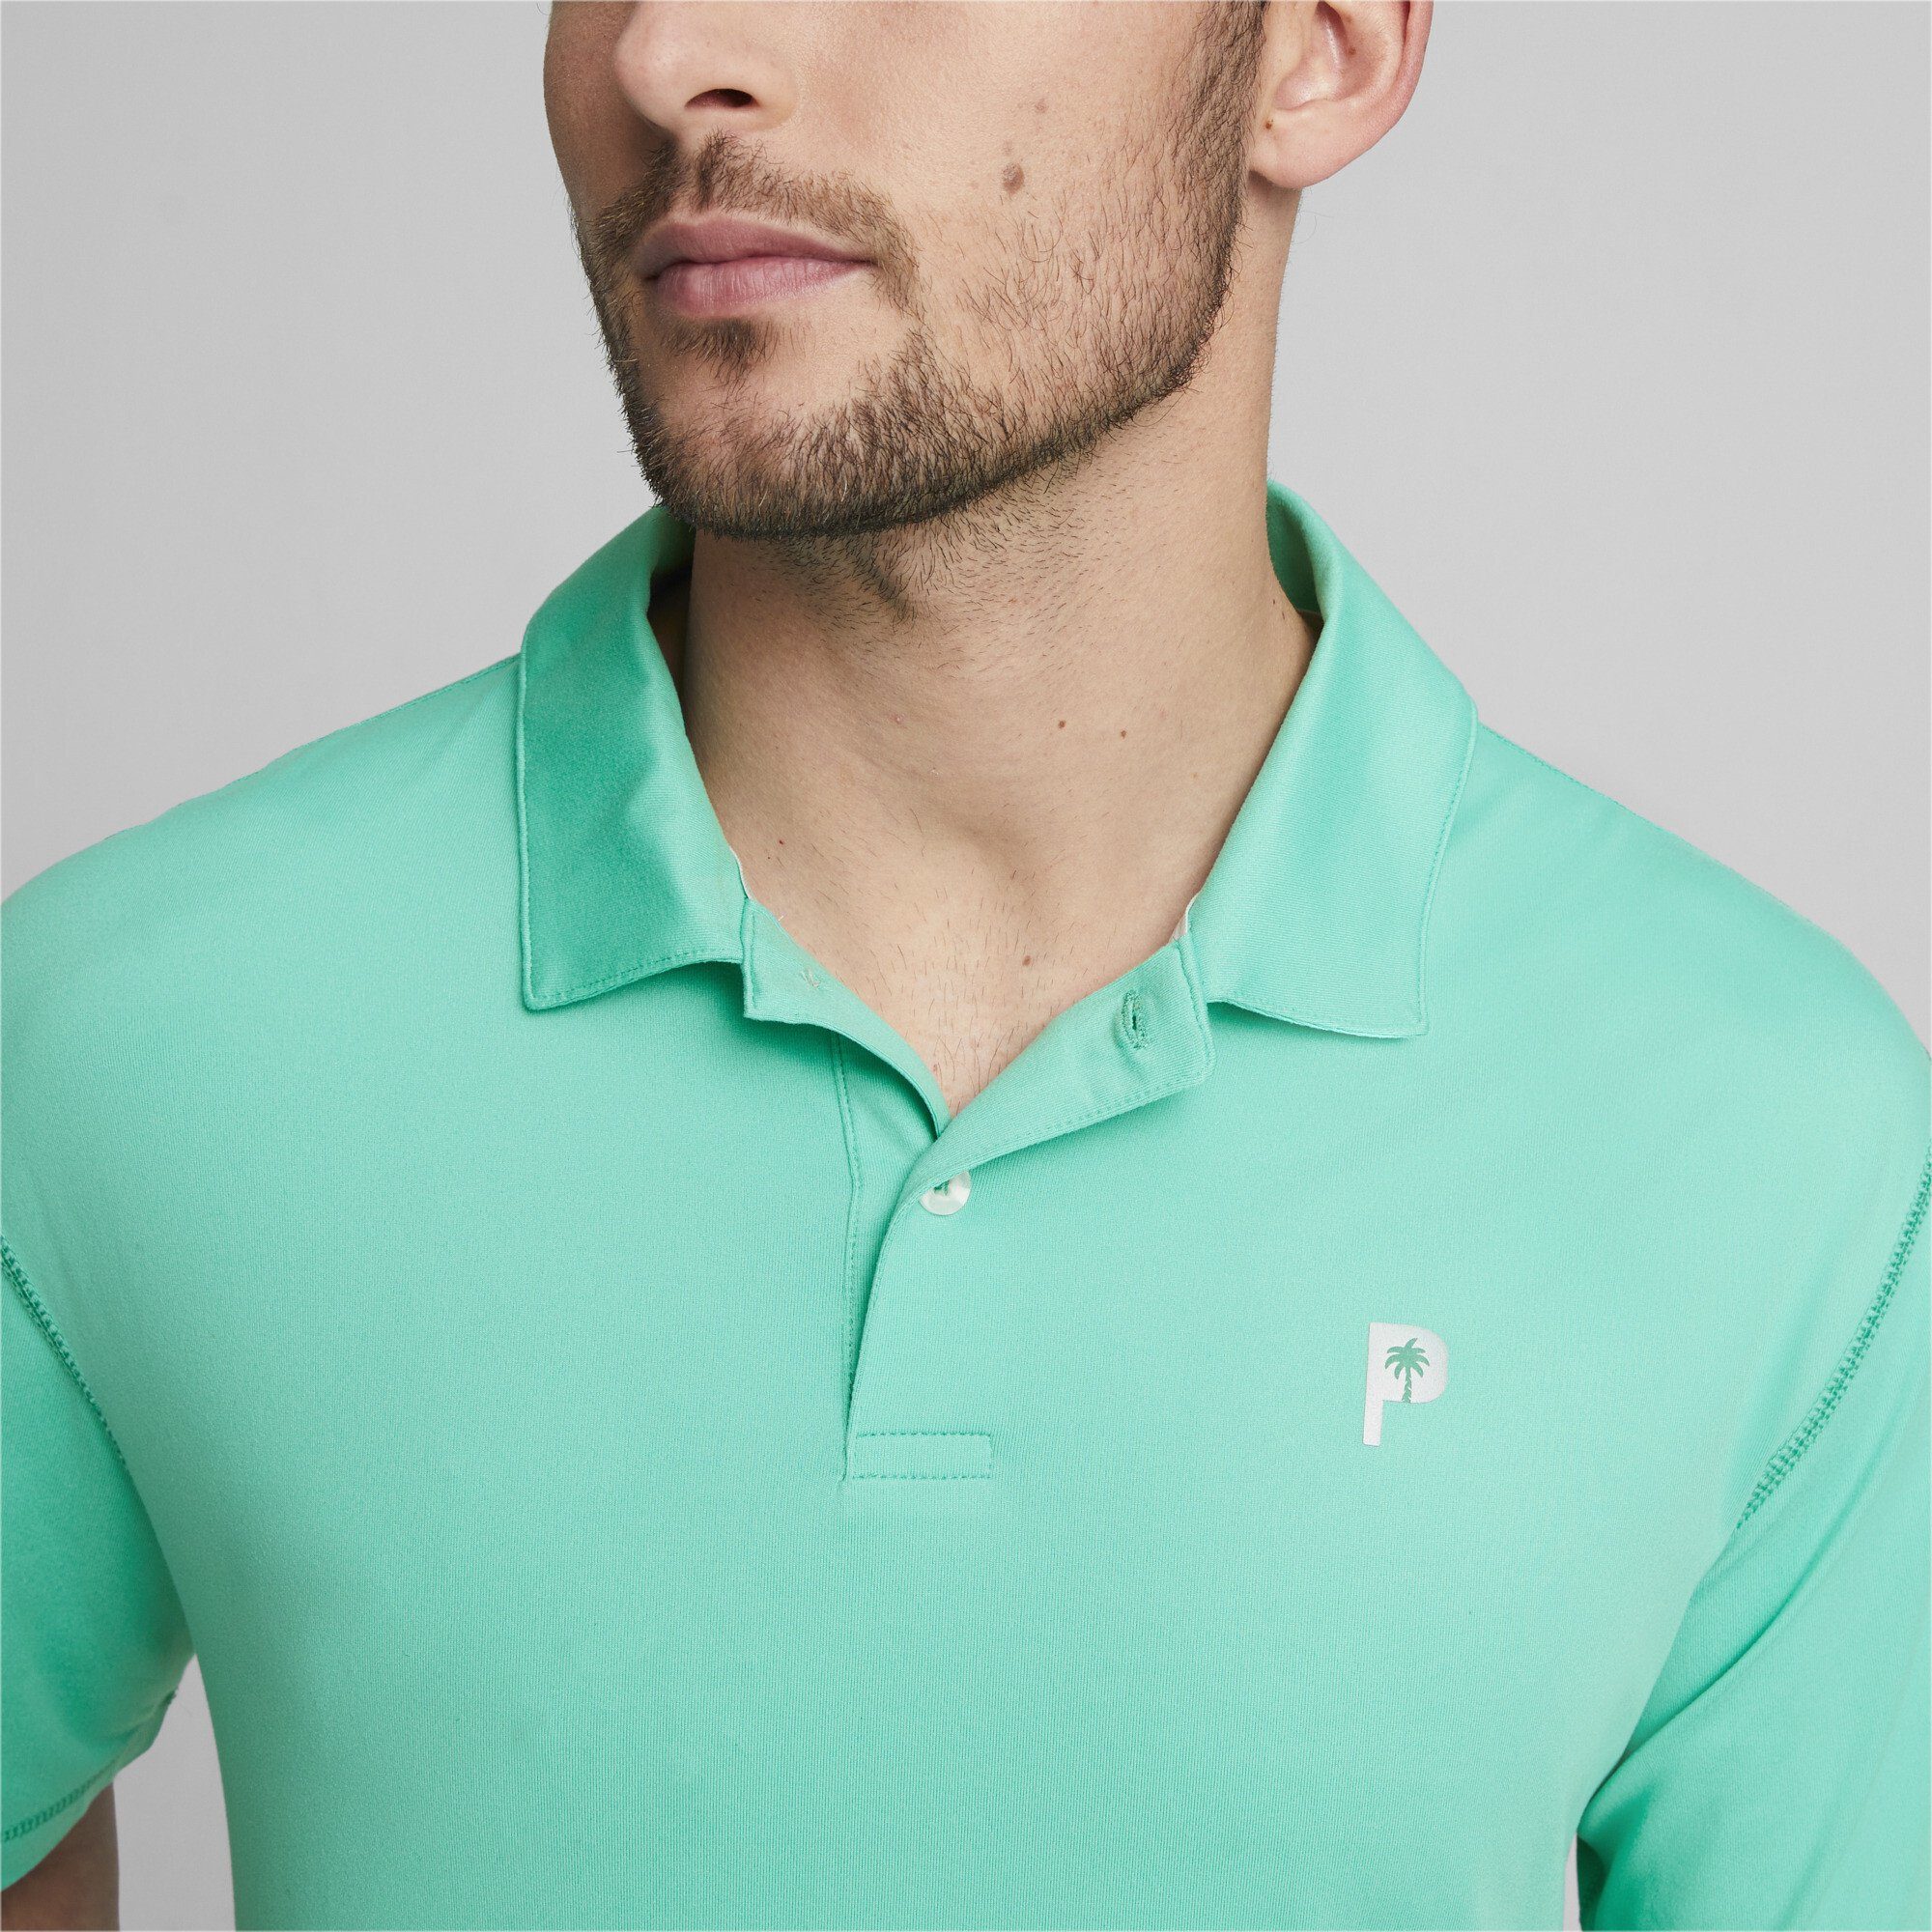 PUMA Herren CREW TREE Golf-Poloshirt Aqua Poloshirt PALM Green PUMA x